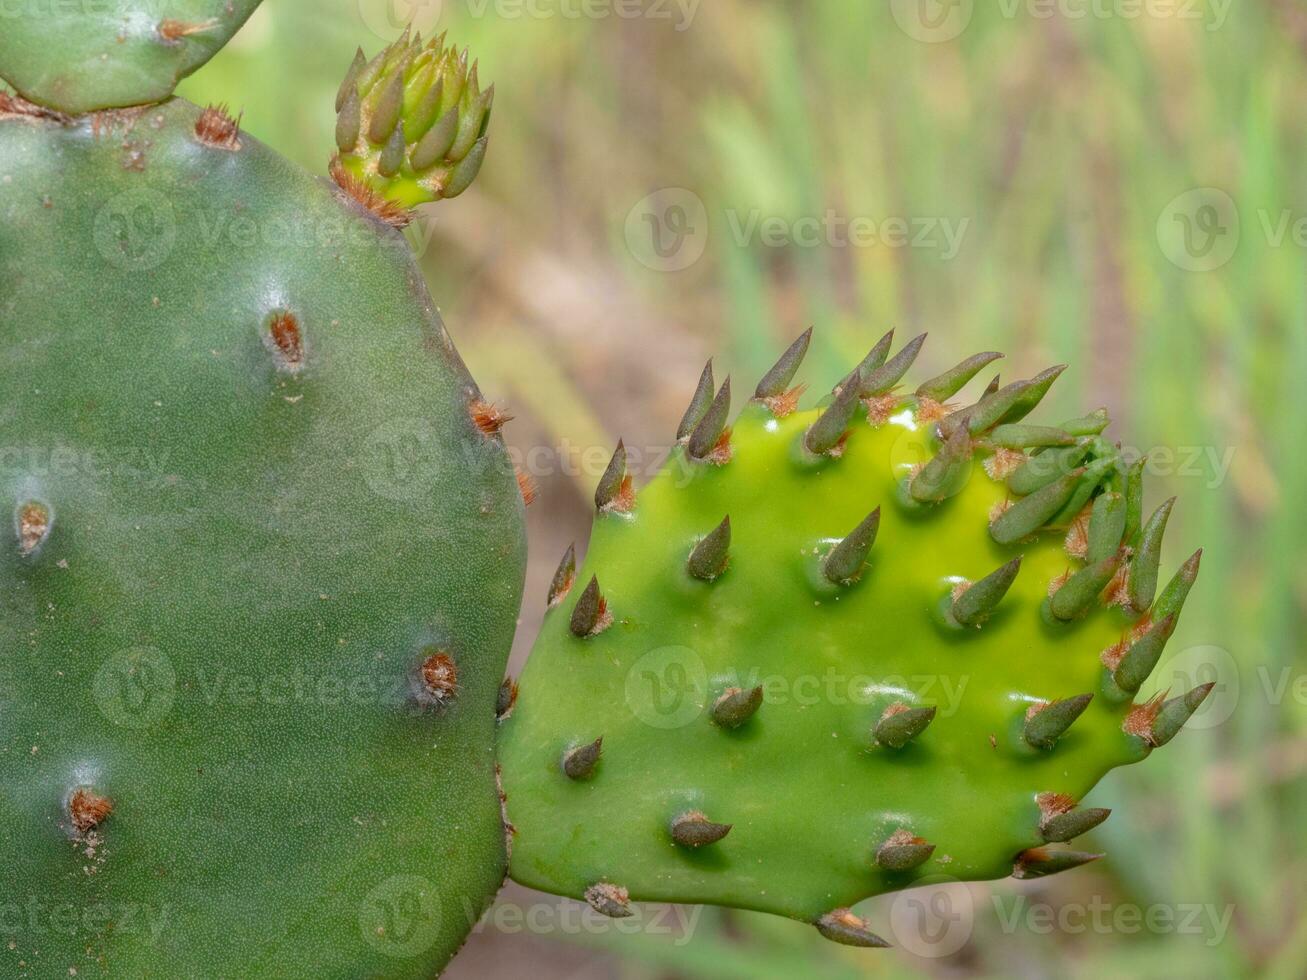 Opuntia humifusa displaying barbs on new, green growth. photo